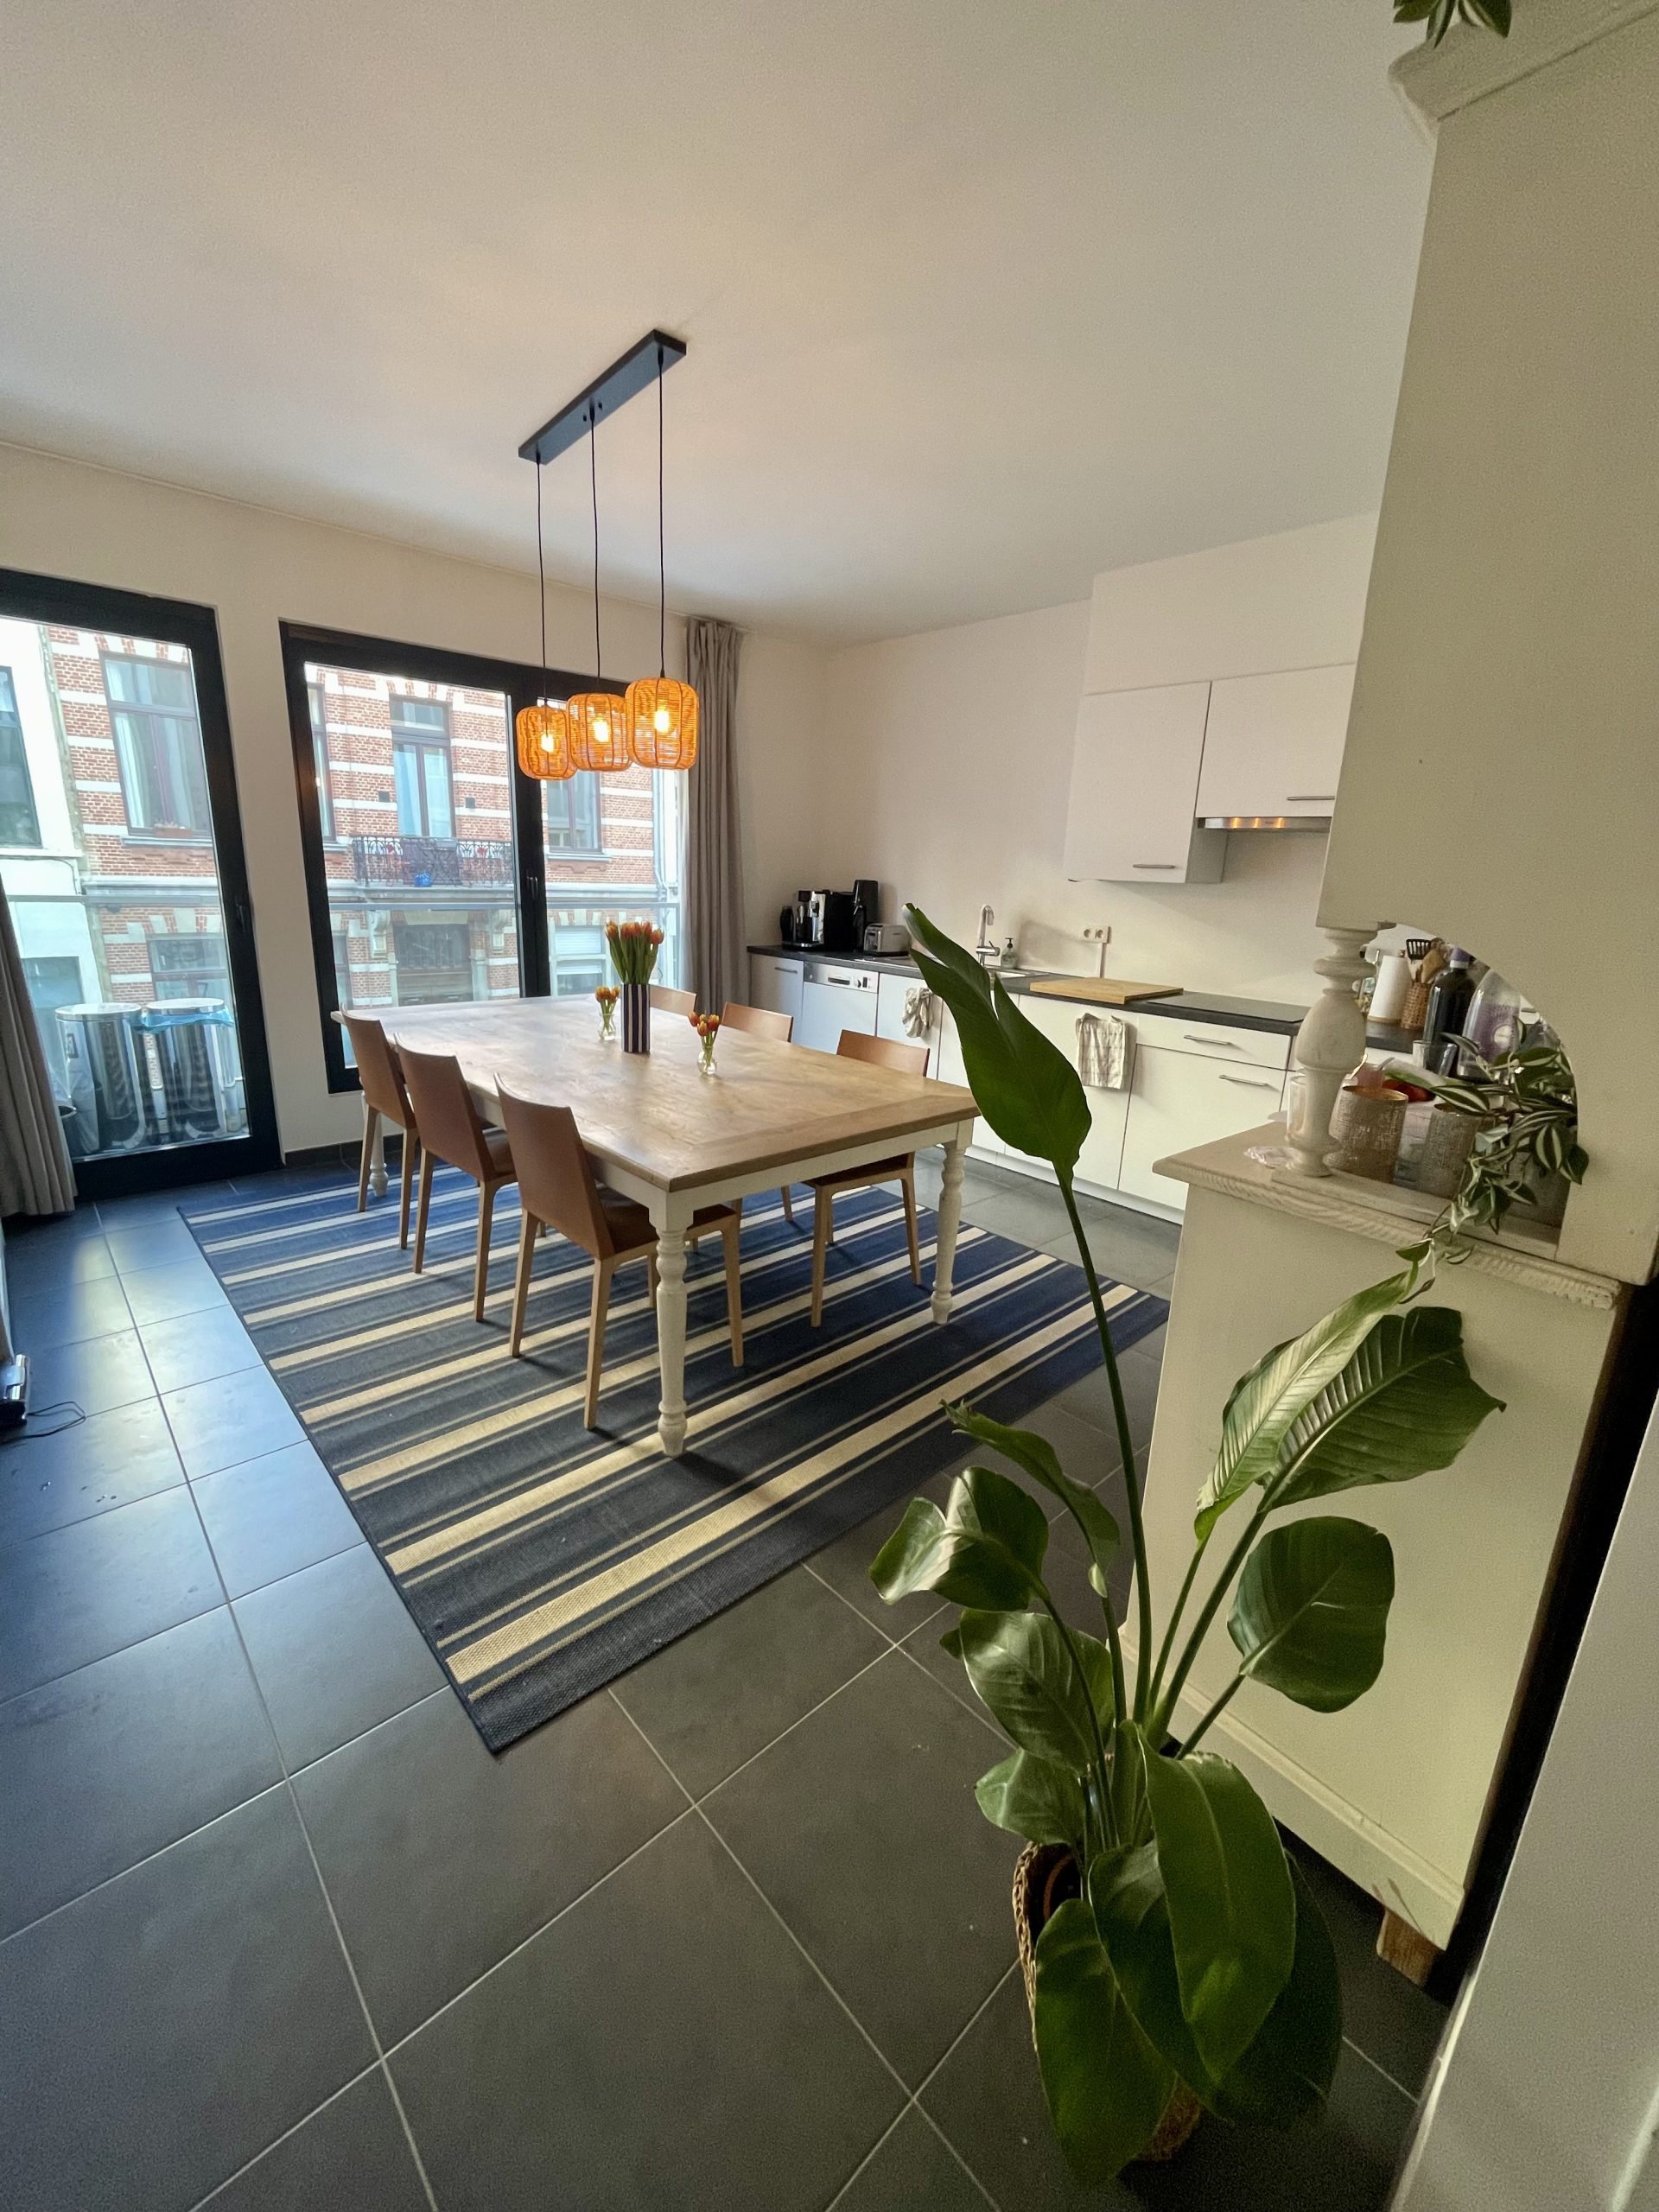 apartment for rent in antwerp - kitchen